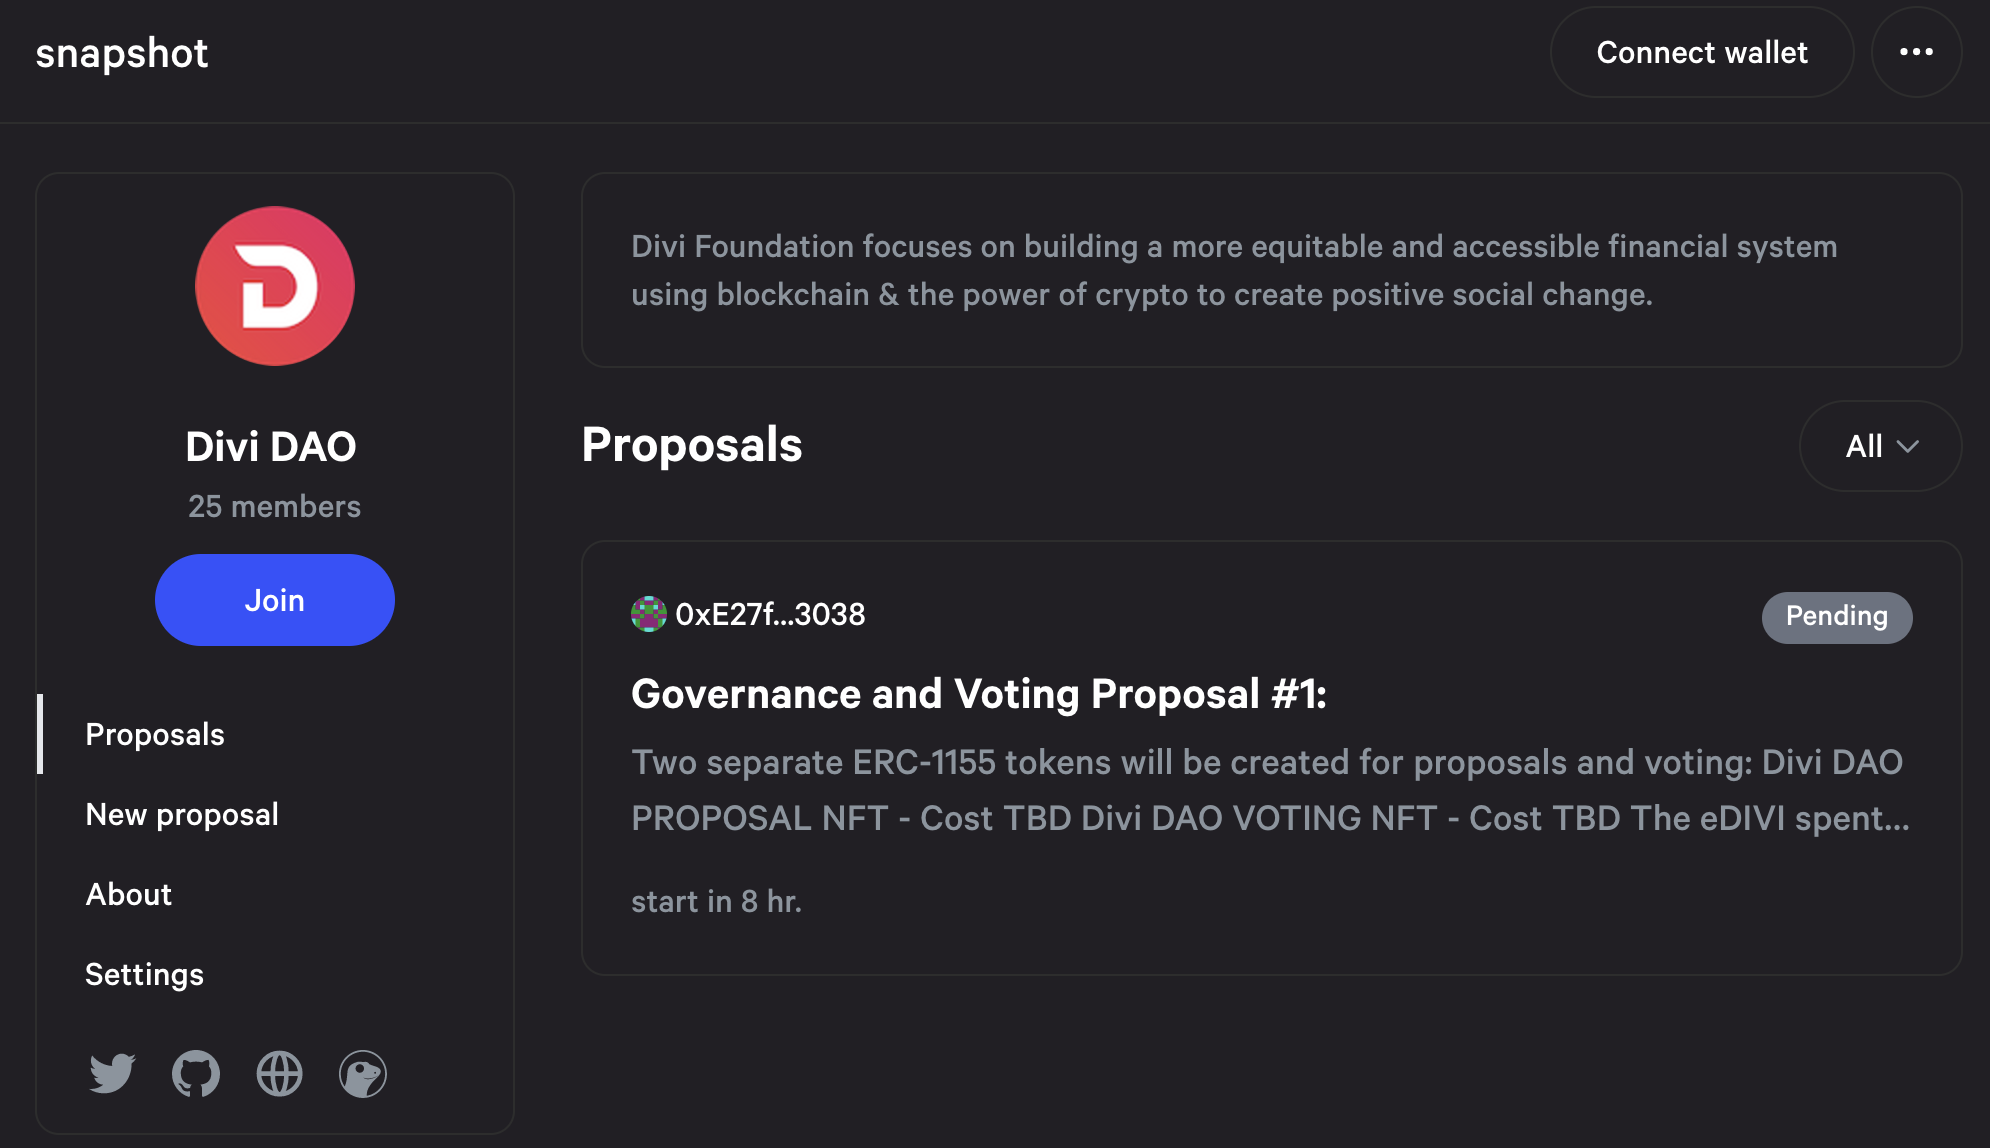 Voting proposal image